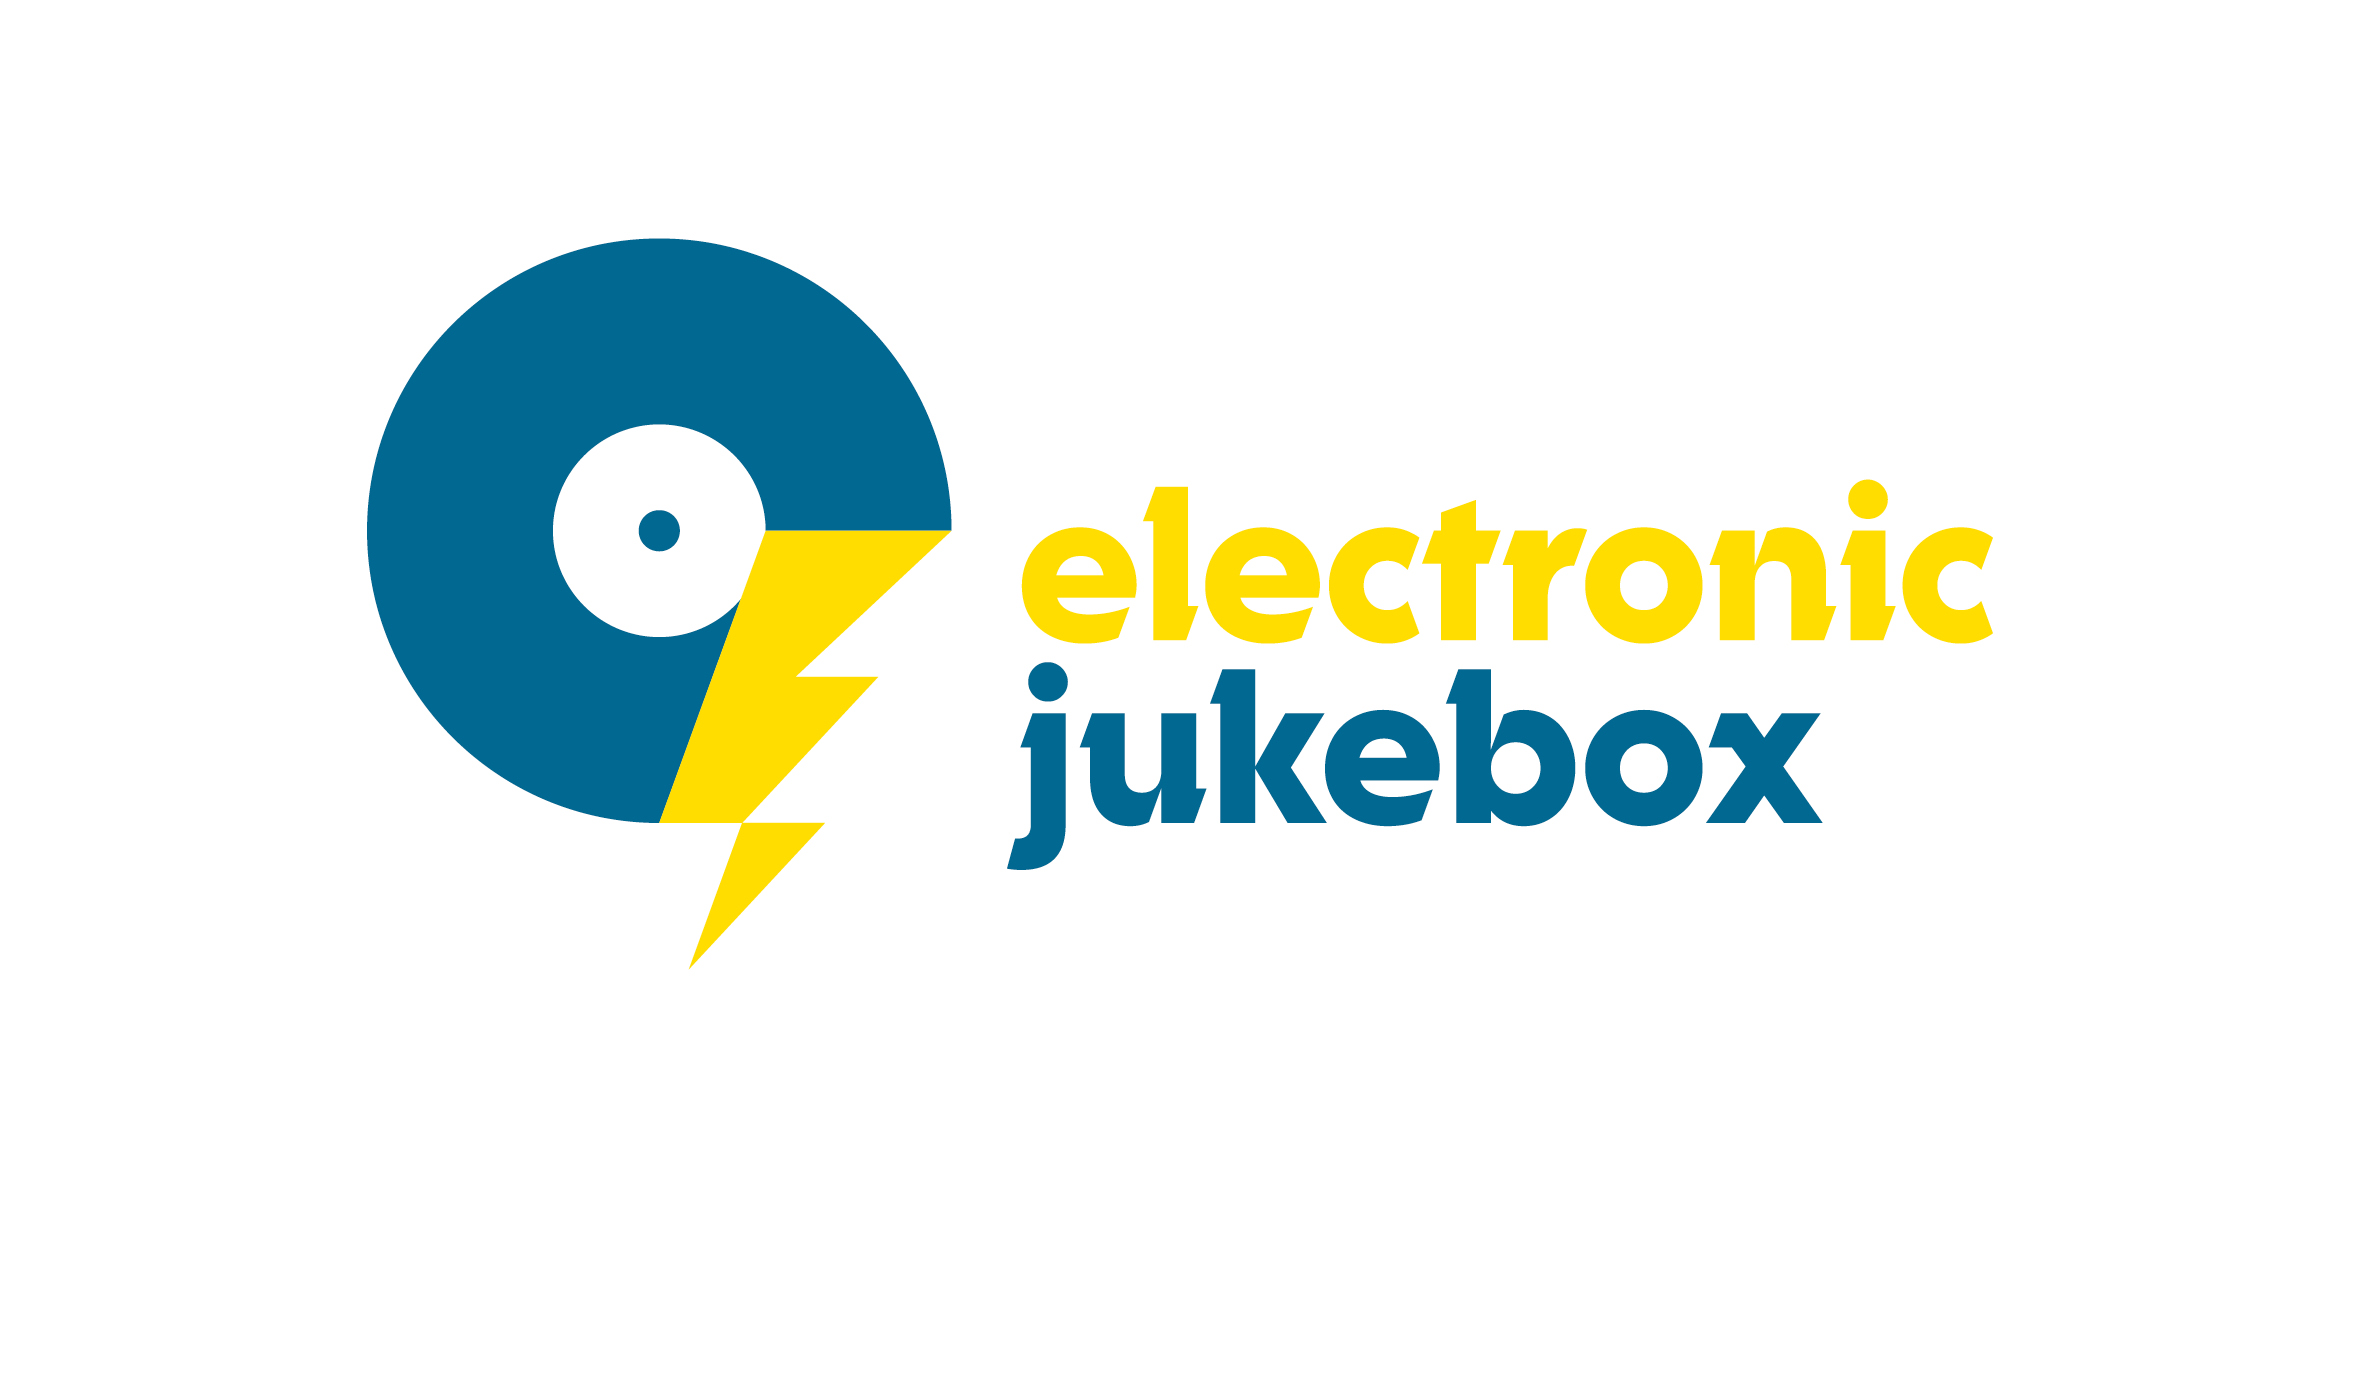 Elektronic Jukebox, Logoentwicklung, Corporate Design, Bildkonzept, Logo, Wort-Bildmarke, DJ, elektronische Musik